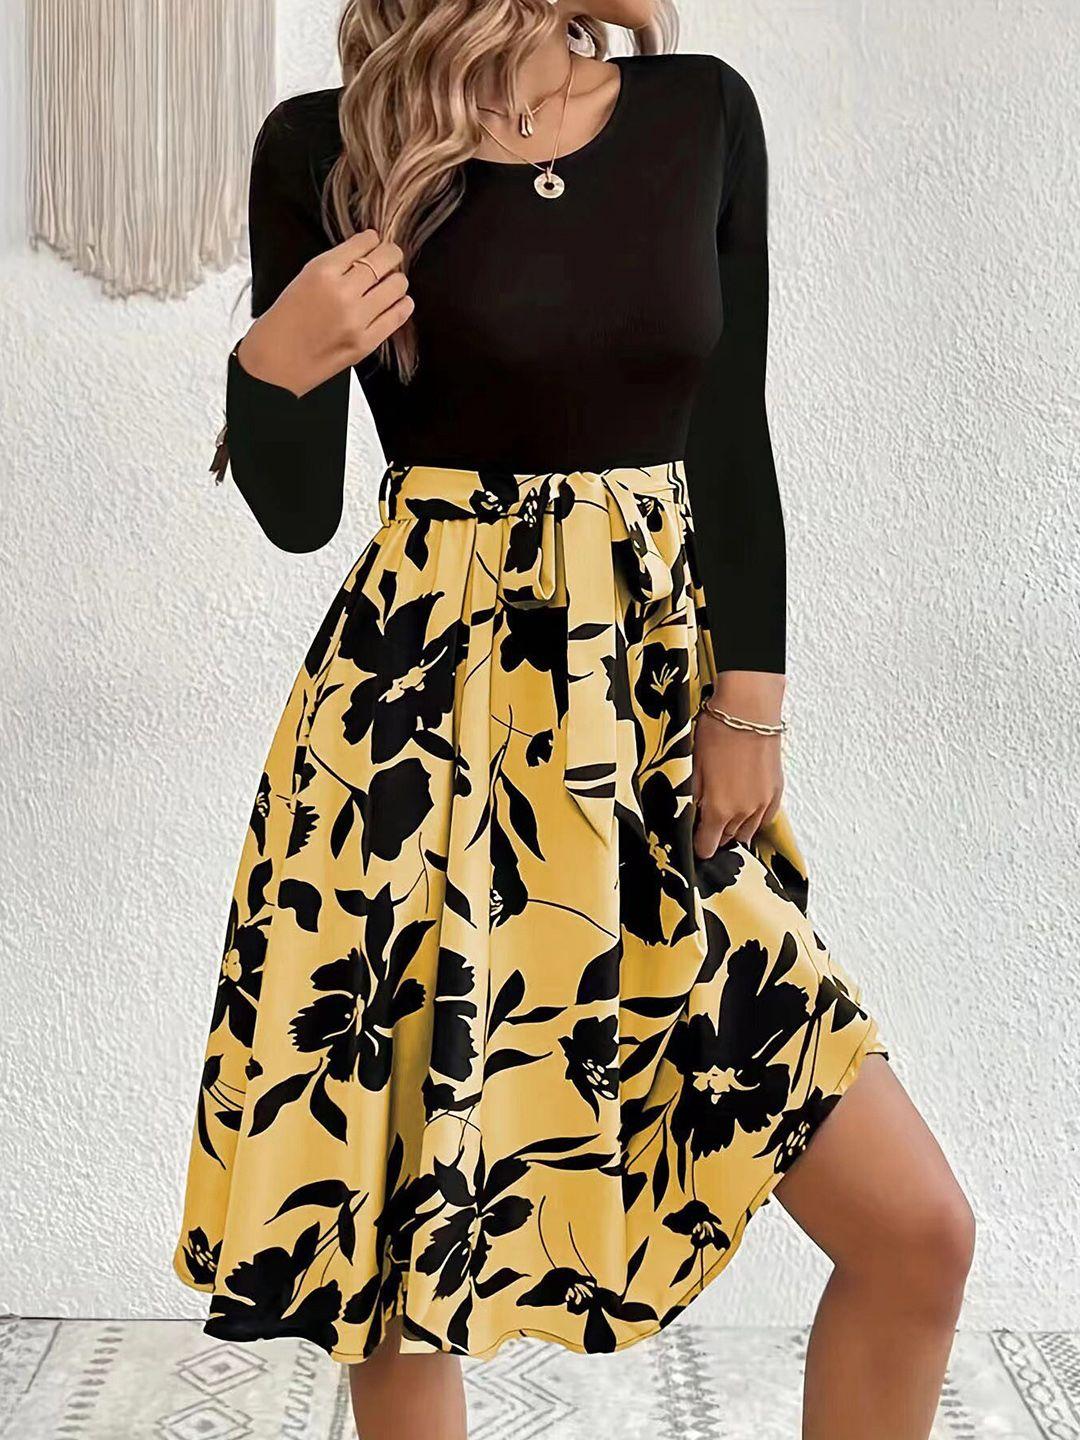 stylecast yellow & black print fit & flare dress